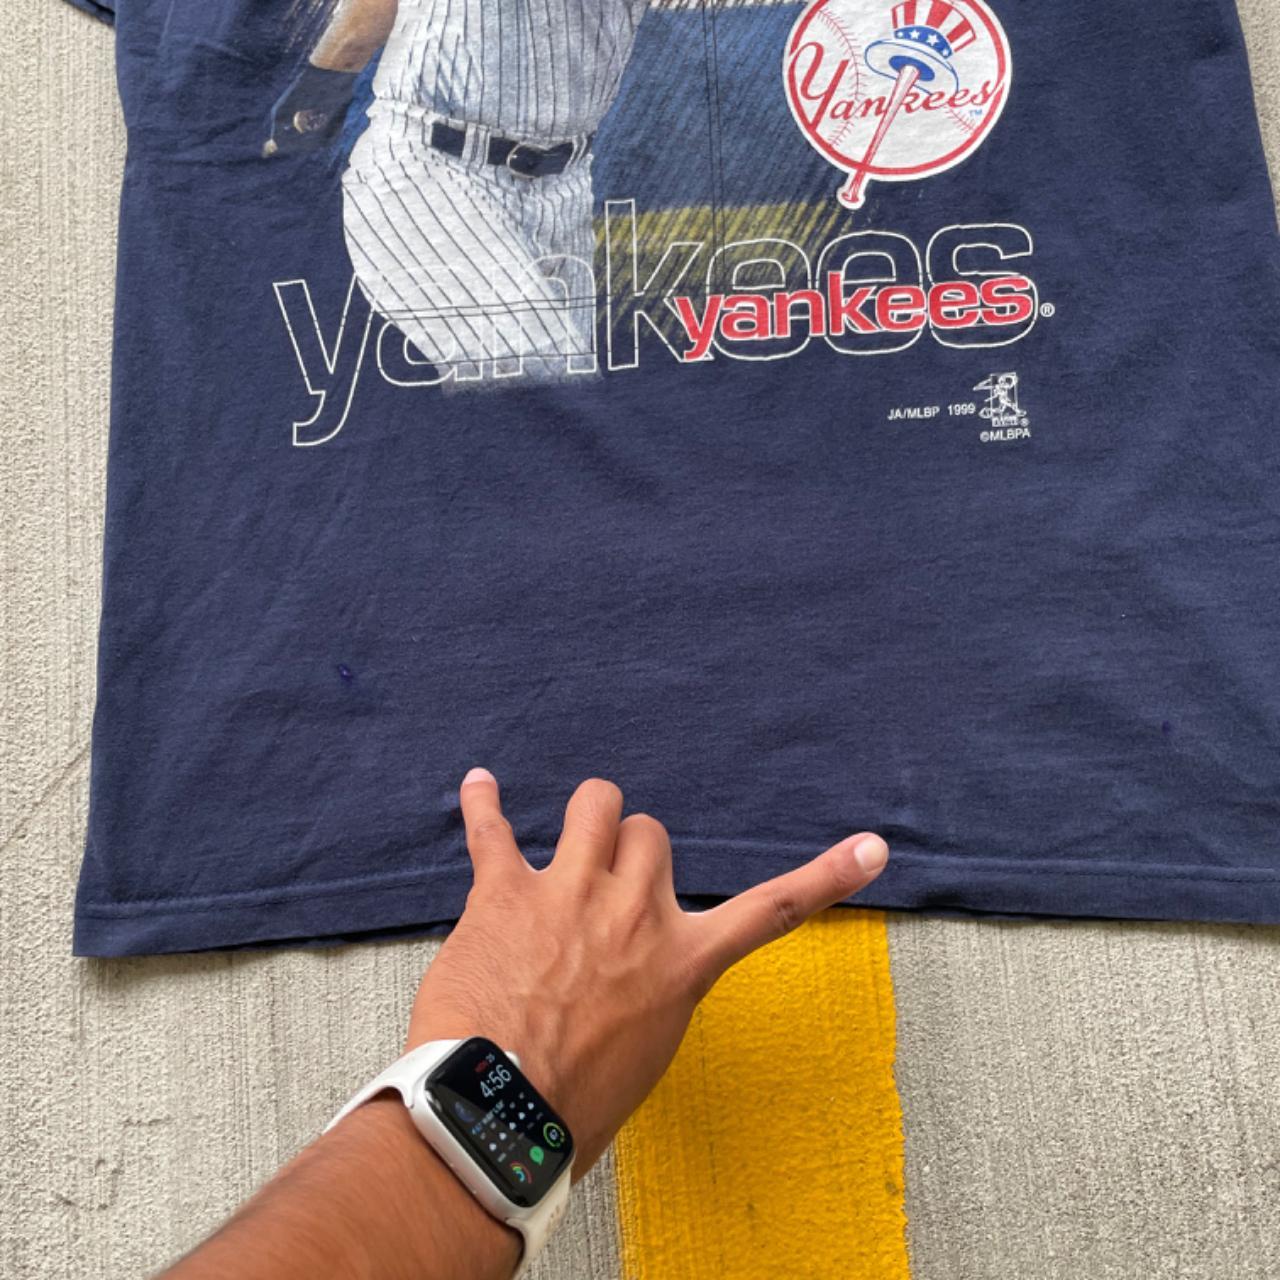 Tino Martinez Yankees jersey Size L Authentic - Depop